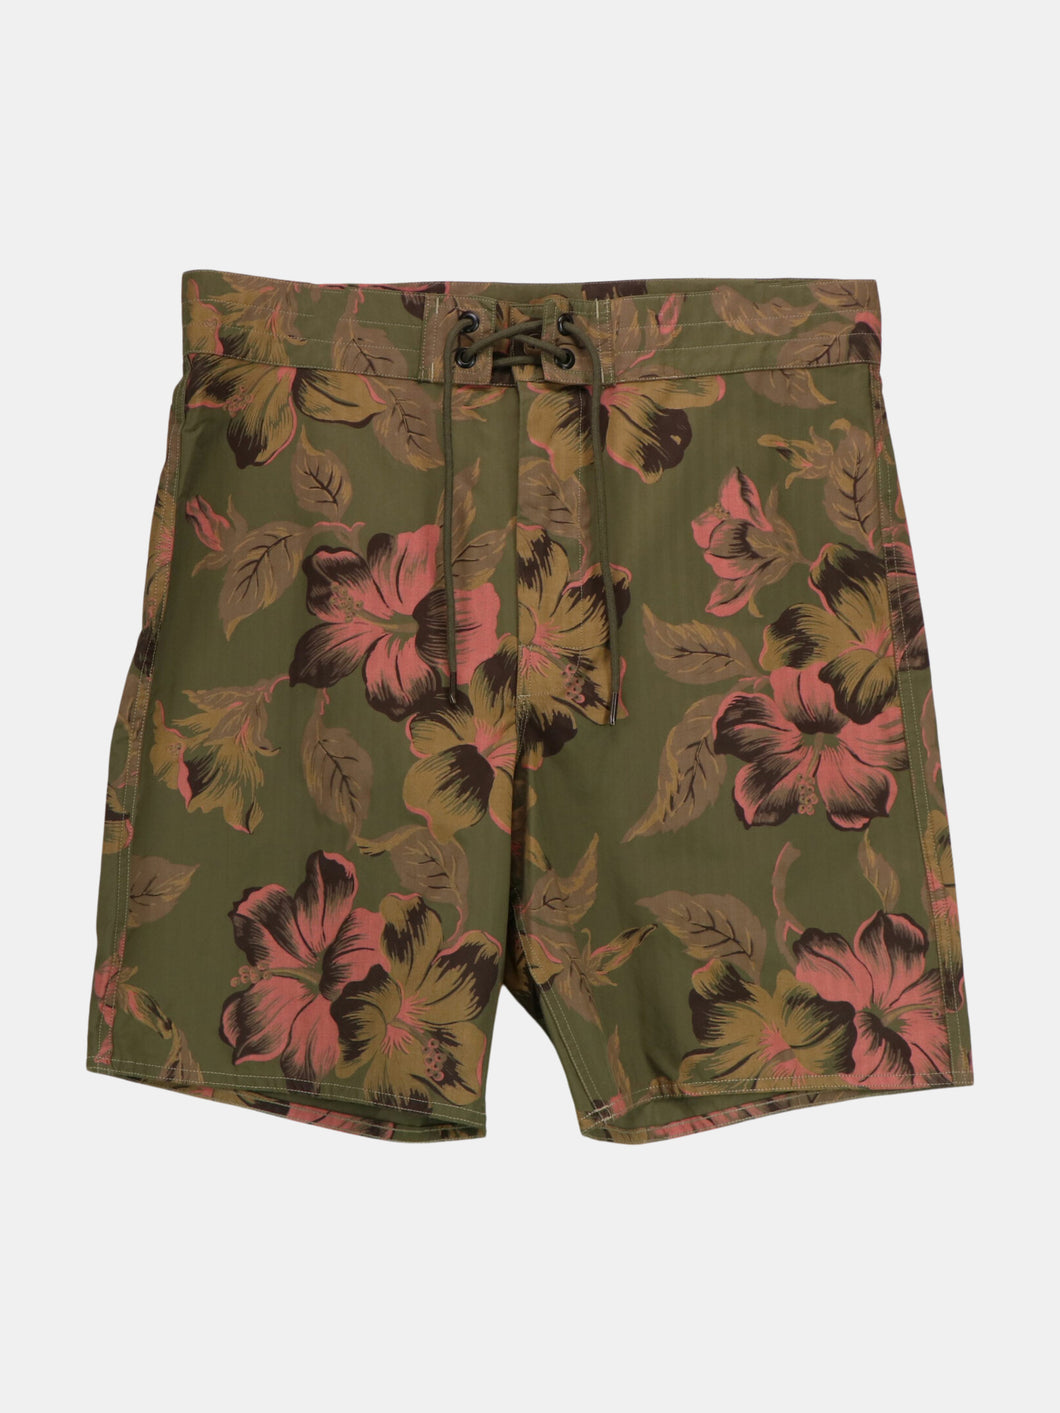 Ralph Lauren Men's Green/Pink Military Floral Cotton Short